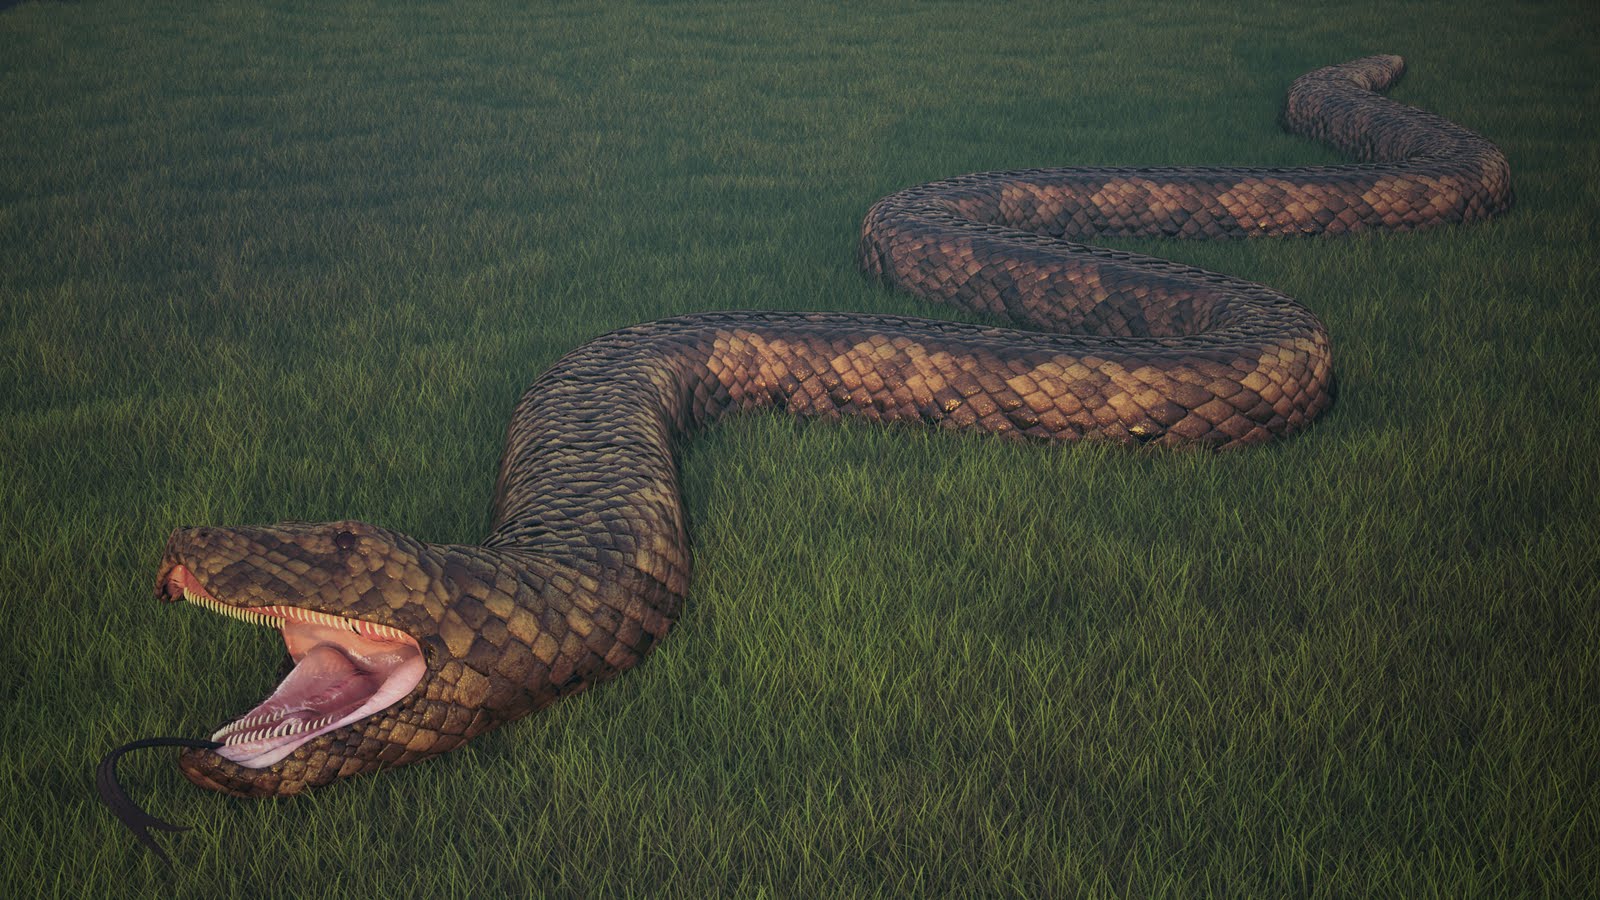 Thick snake. Анаконда змея. Река Амазонка змея Анаконда. Самая большая змея в мире Анаконда. ТИТАНОБОА змея и Анаконда.